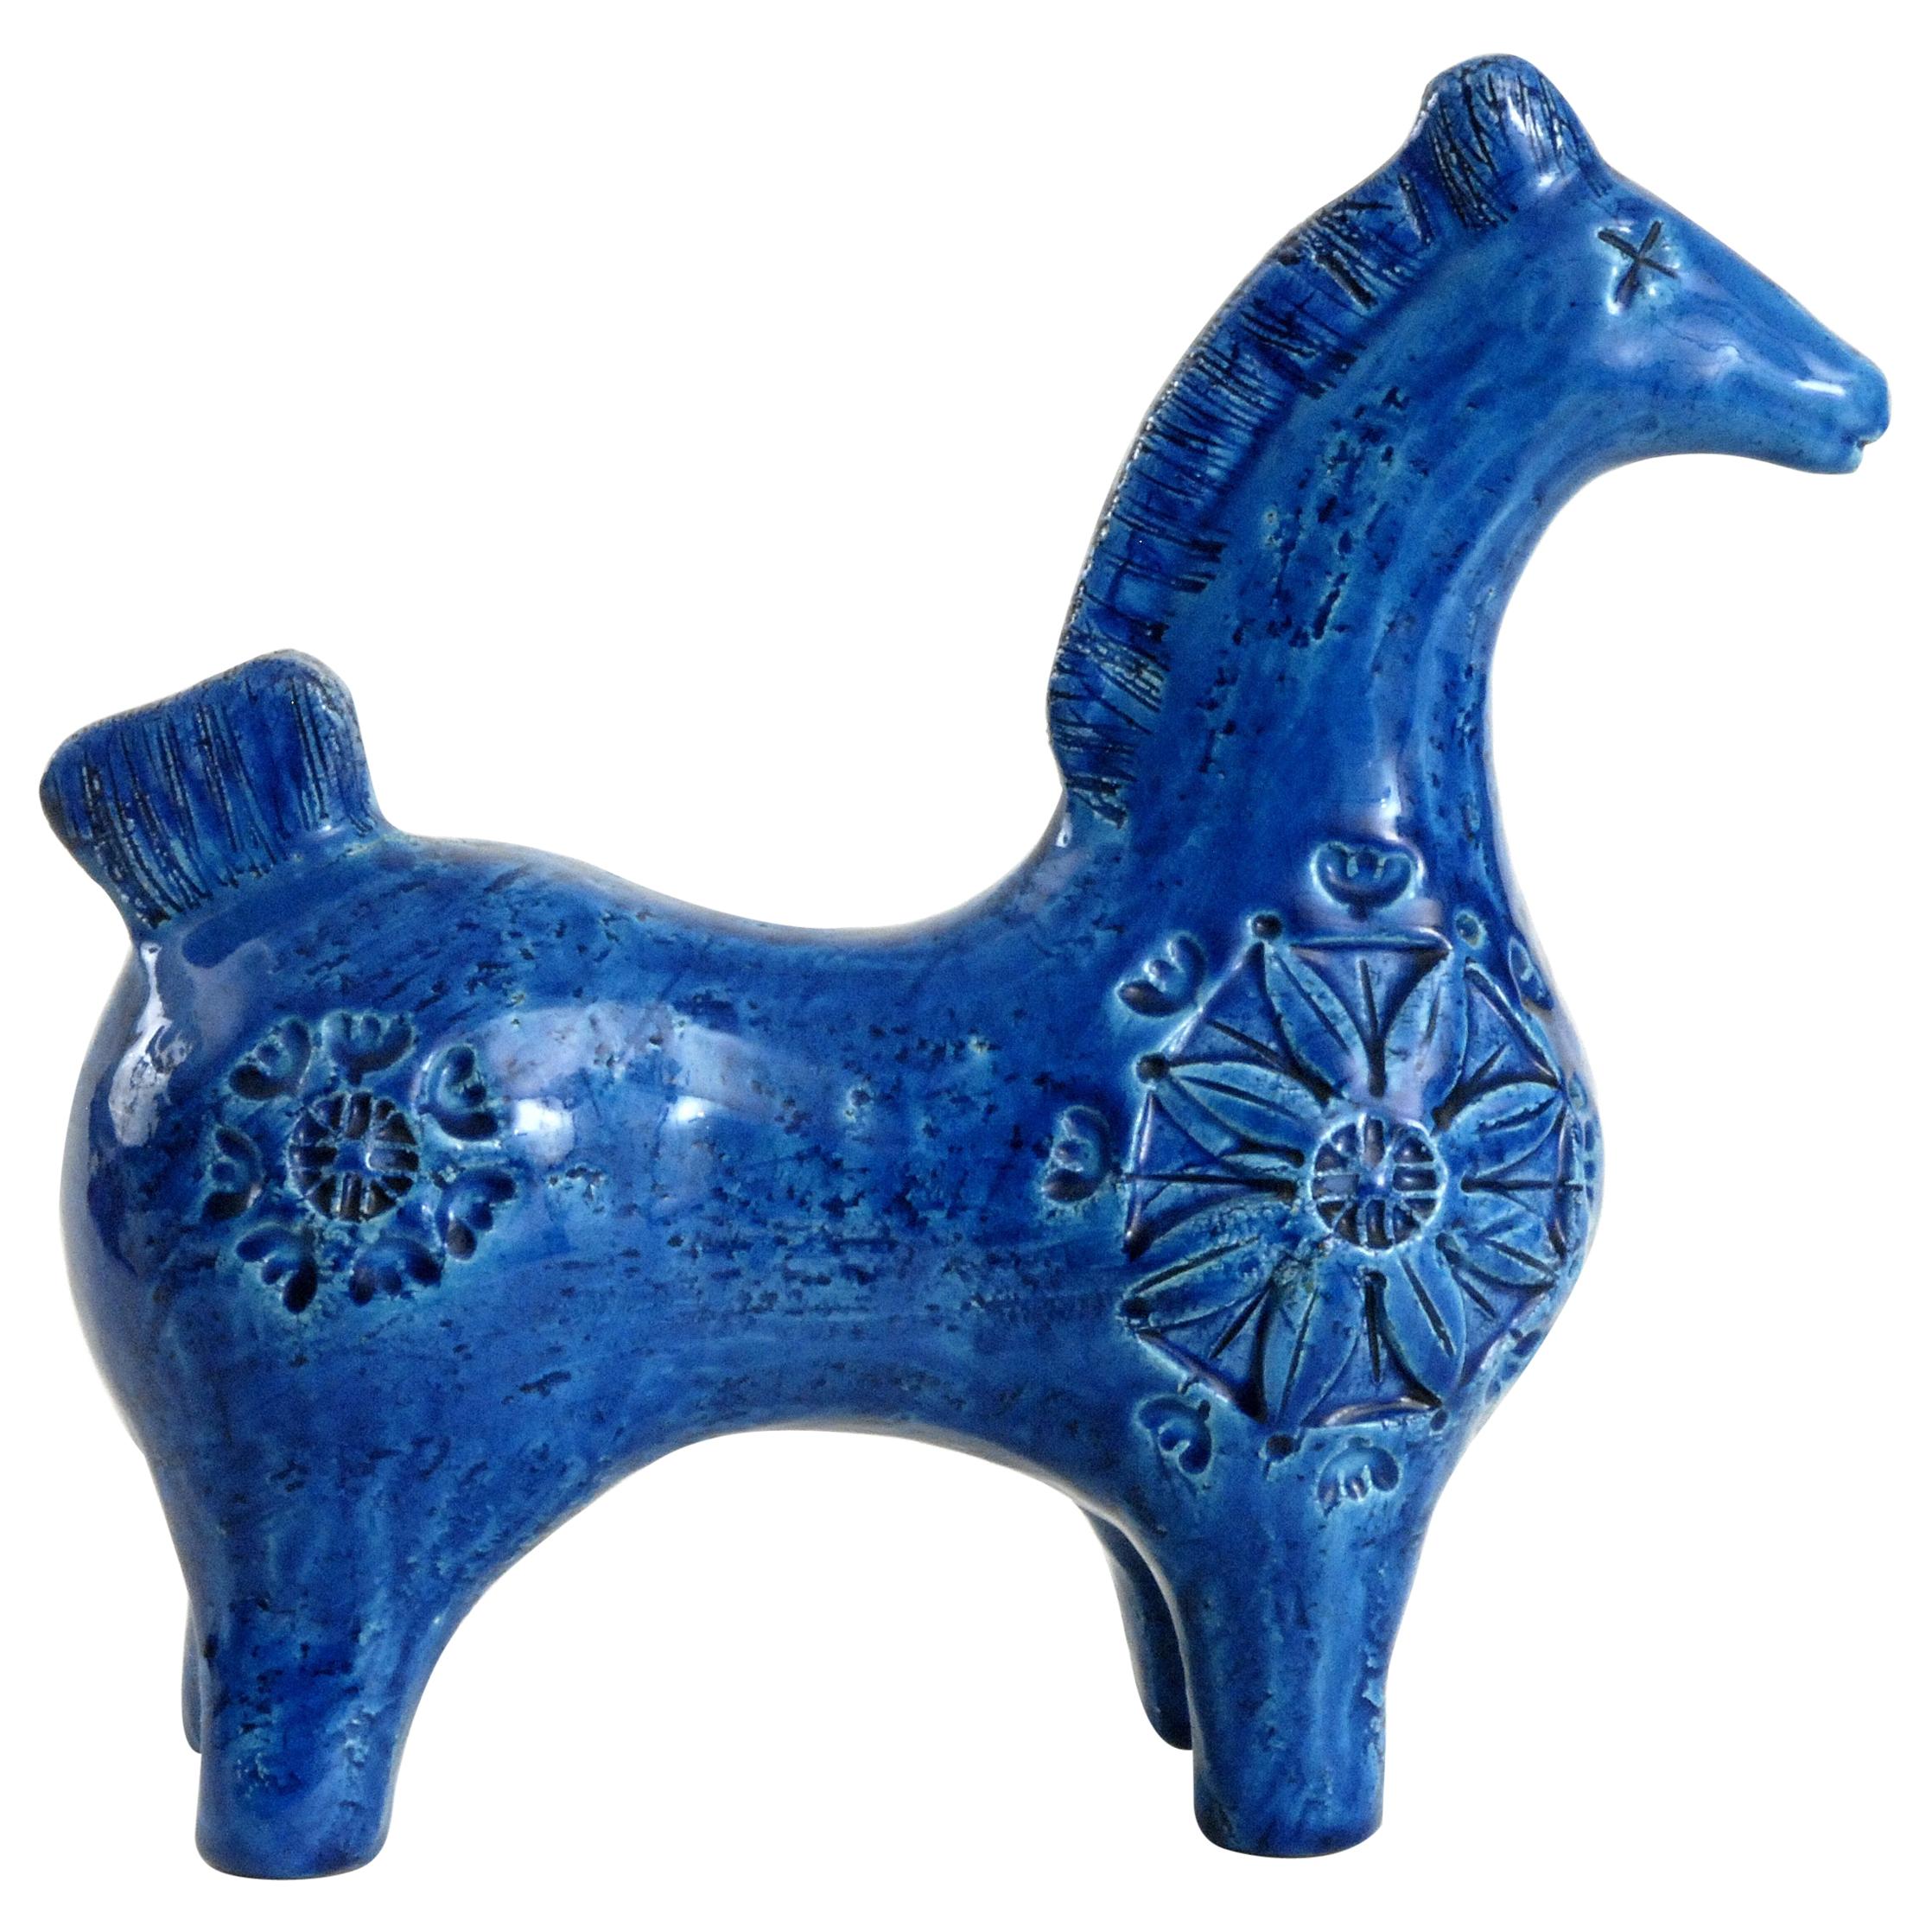 Bitossi Aldo Londi Blue Horse, Italy, circa 1968